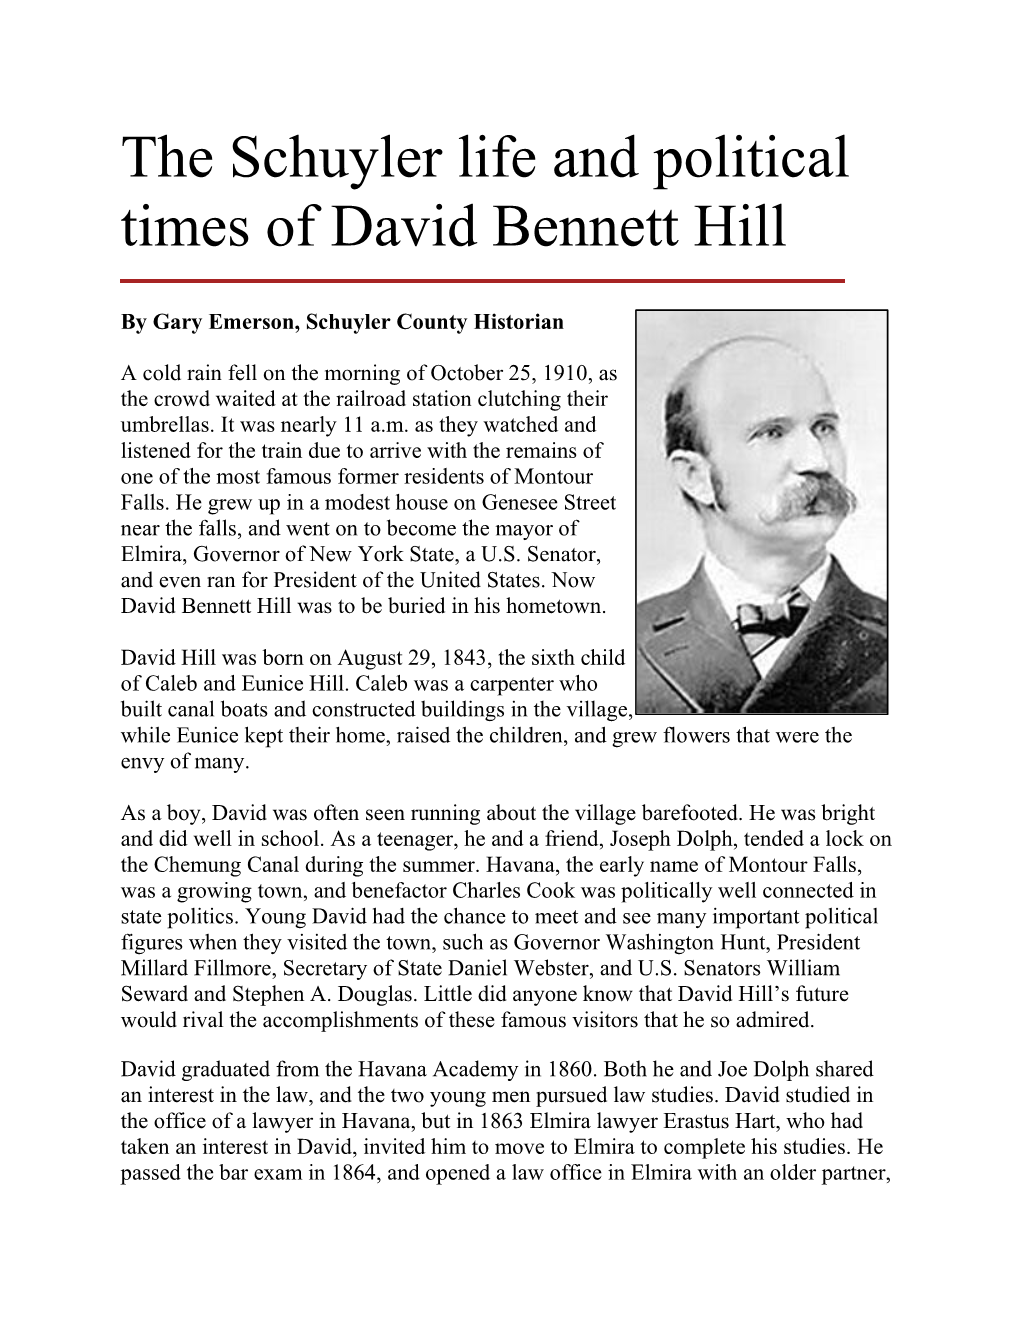 The Schuyler Life and Political Times of David Bennett Hill